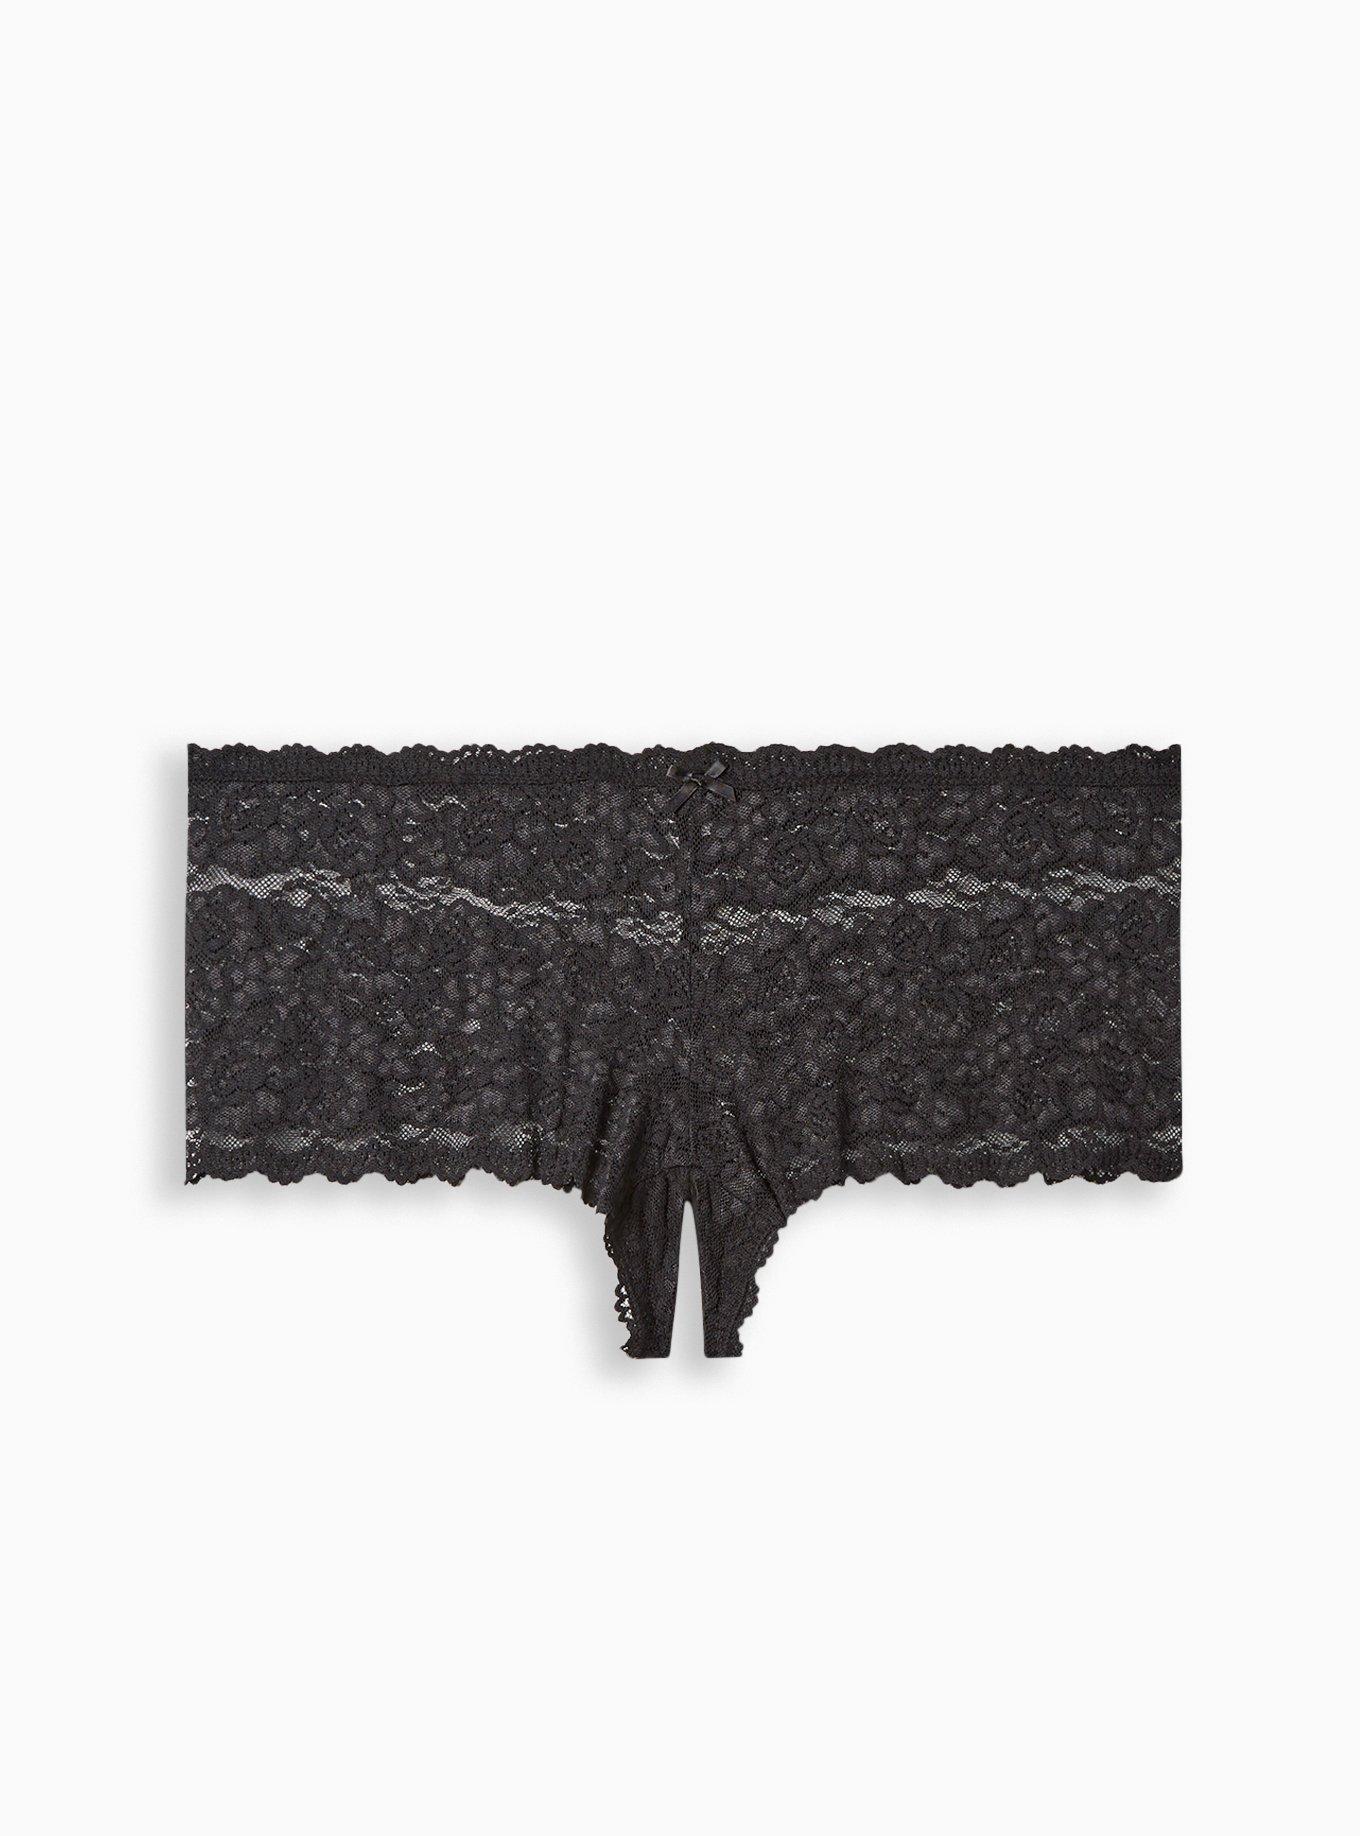 6ixty8ight Lace Cheeky Panty Ladies Underwear (Black, Tag M